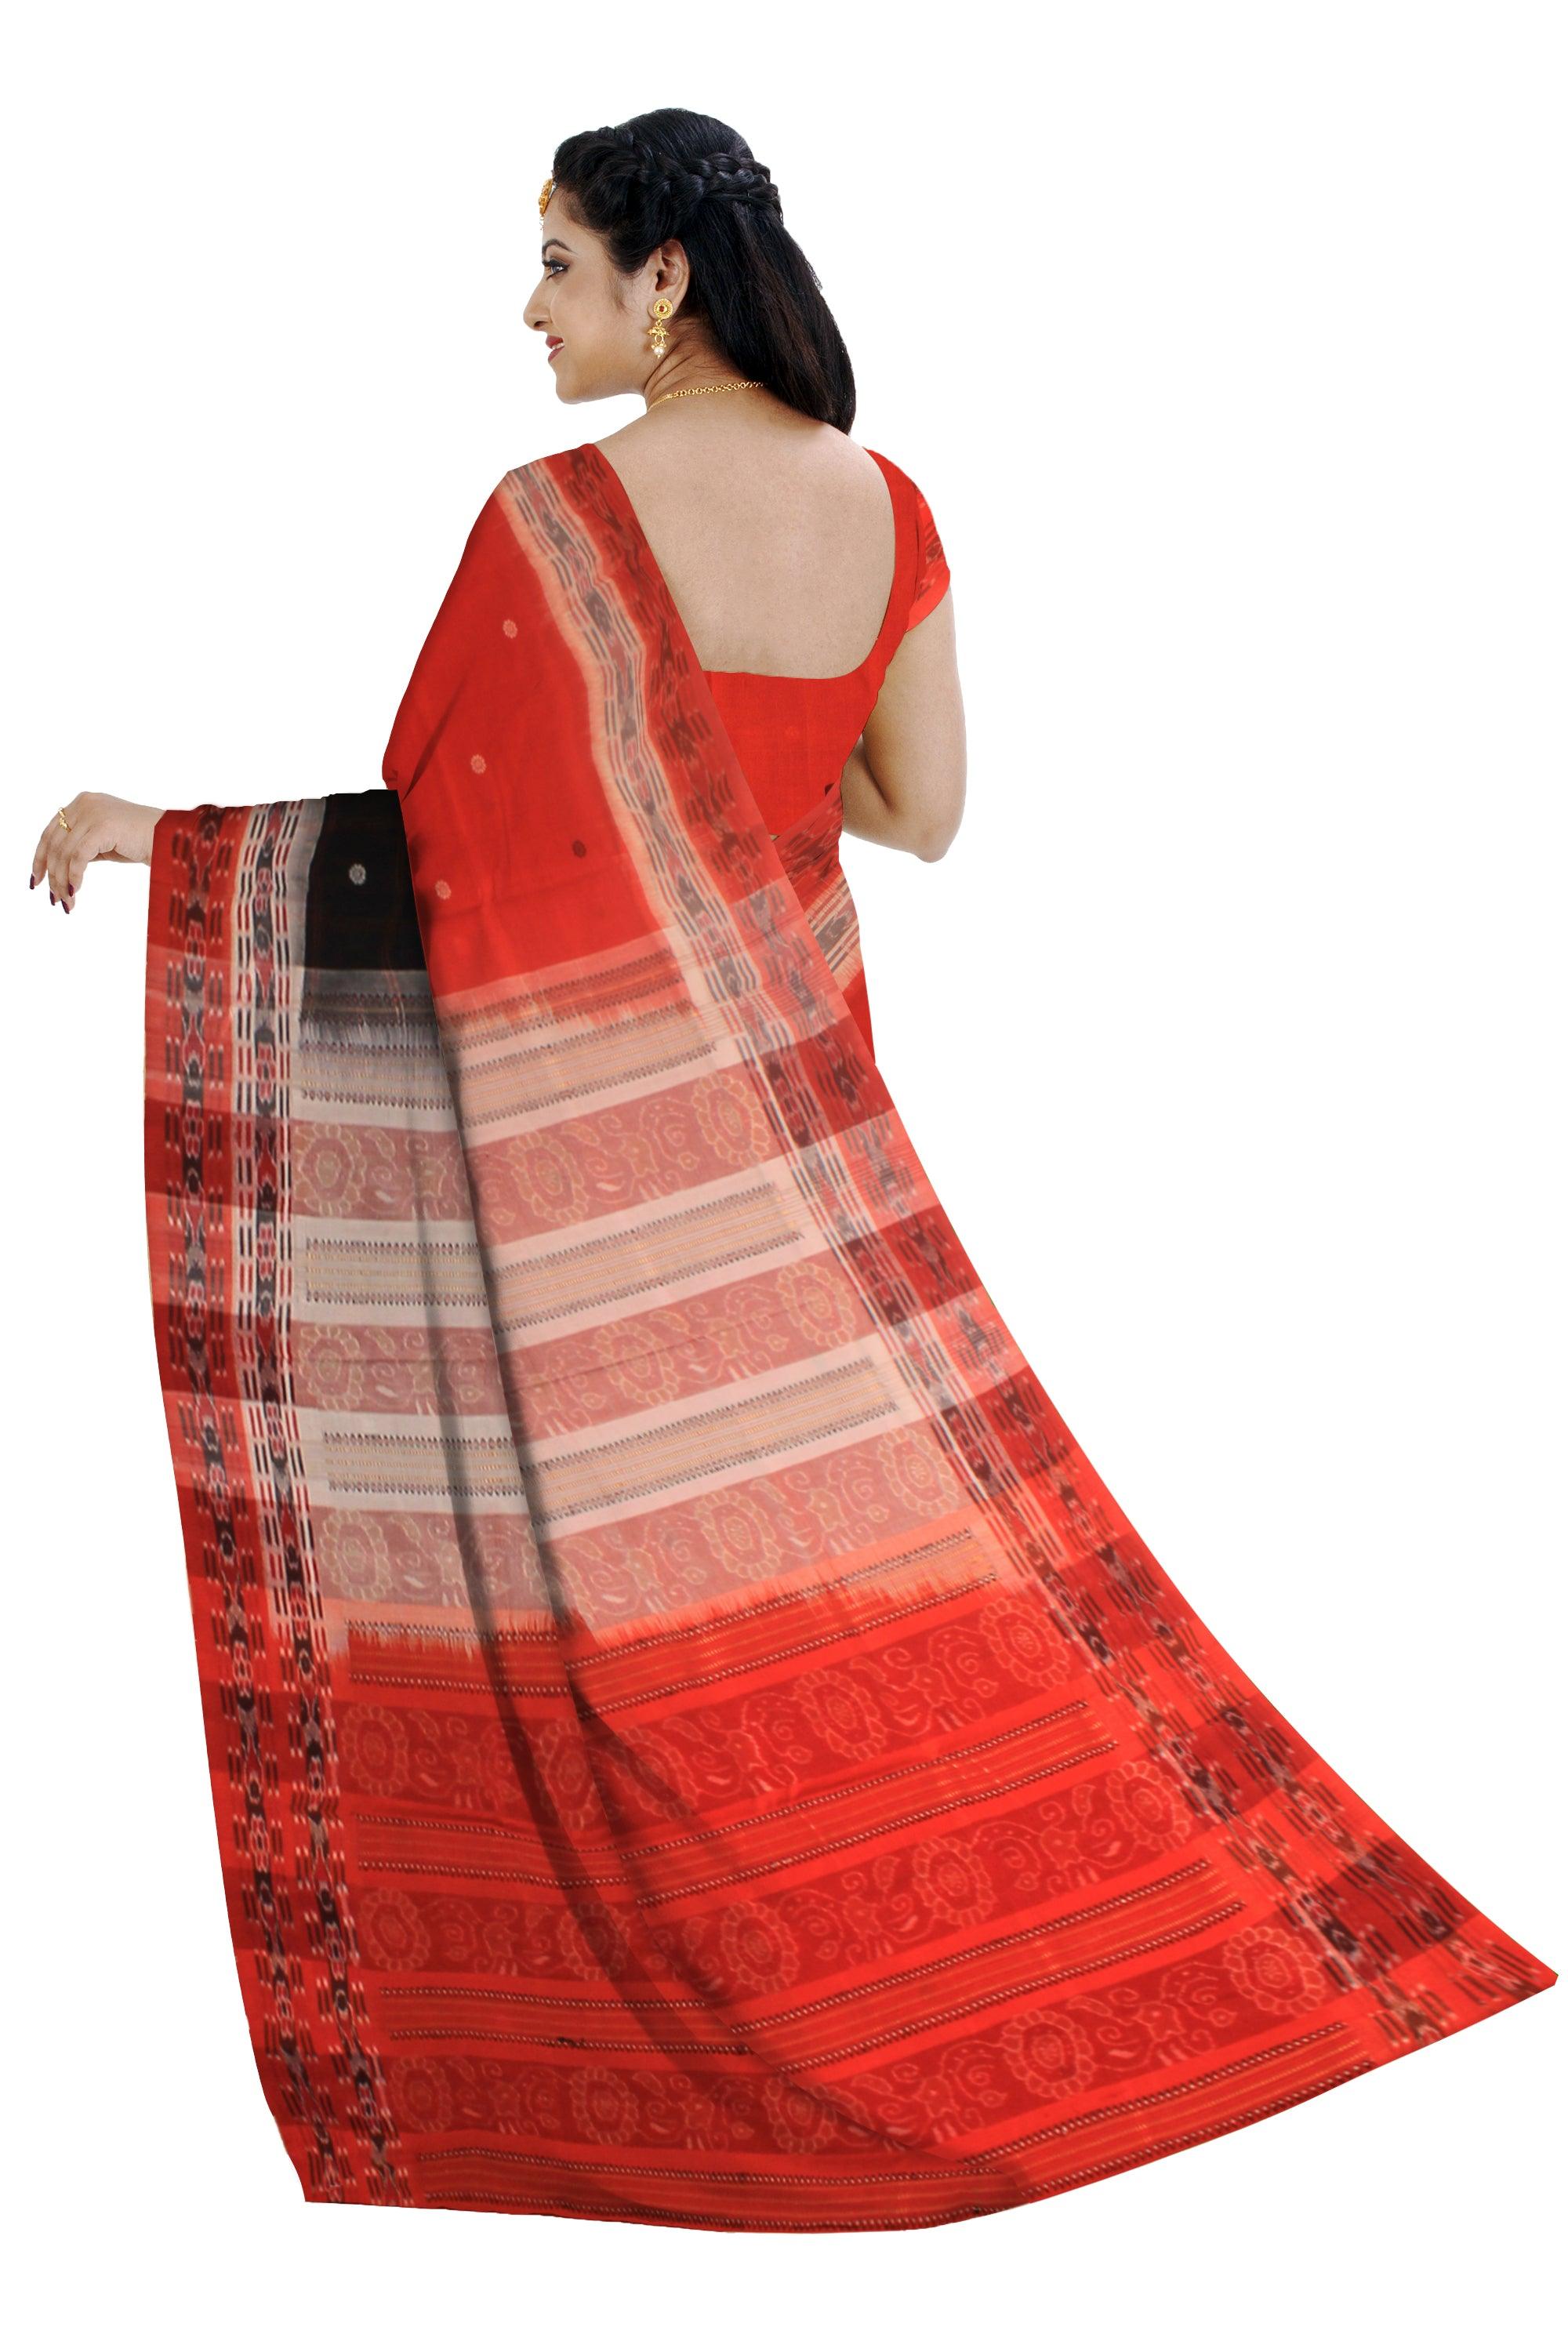 Sambalpuri cotton Saree in Orange and Black Color with booty design in body   with blouse piece. - Koshali Arts & Crafts Enterprise